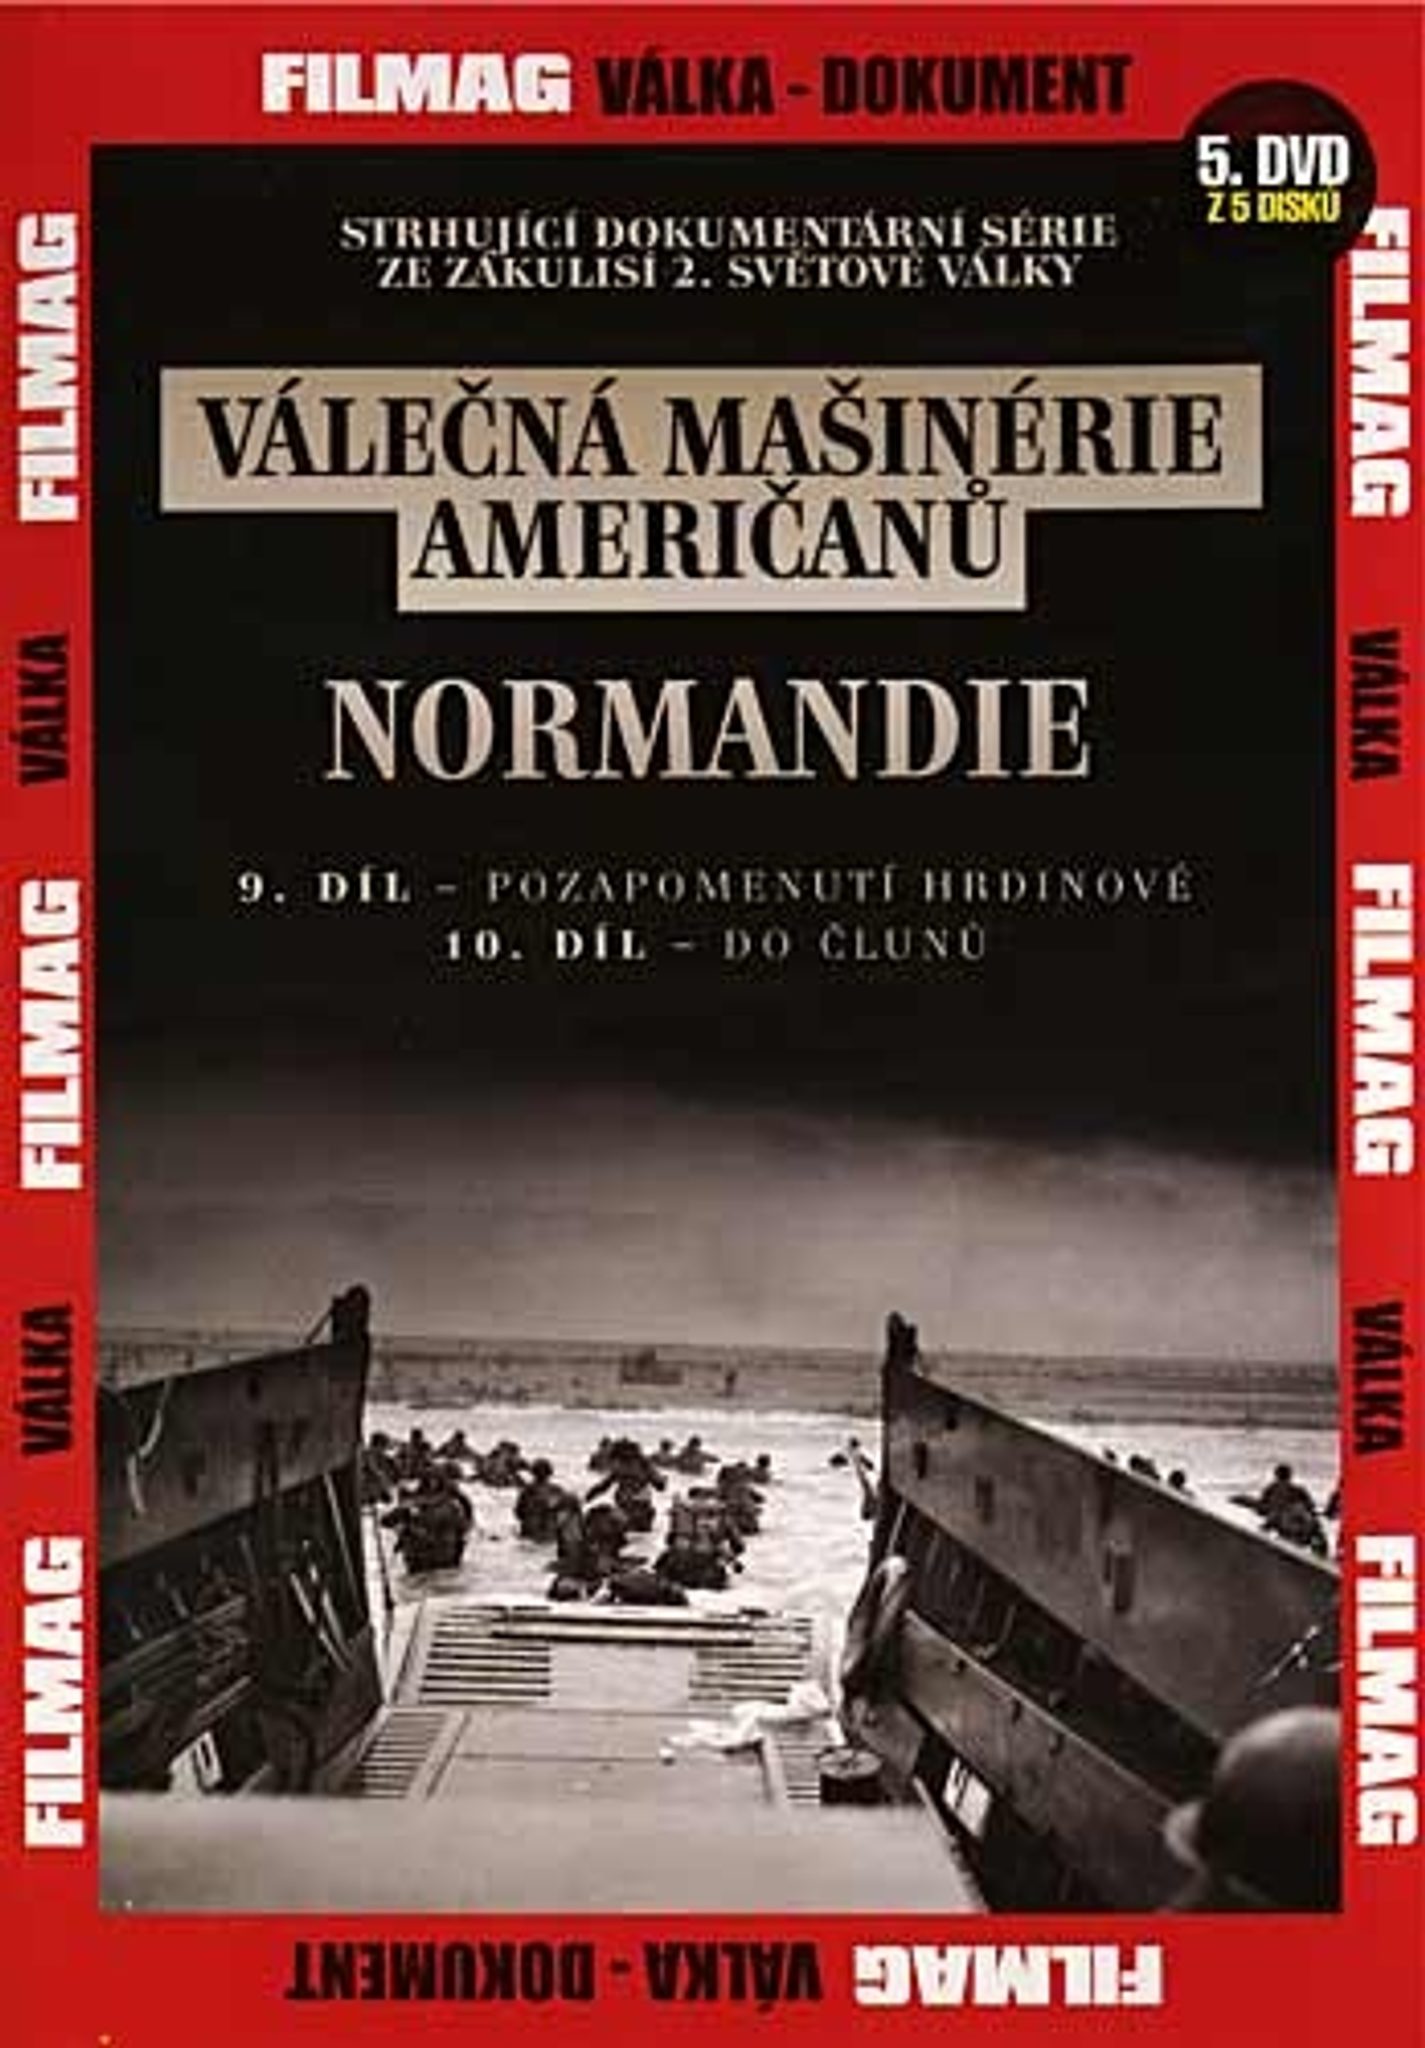 DVD Vlen mainrie amerian - Normandie - Kliknutm na obrzek zavete